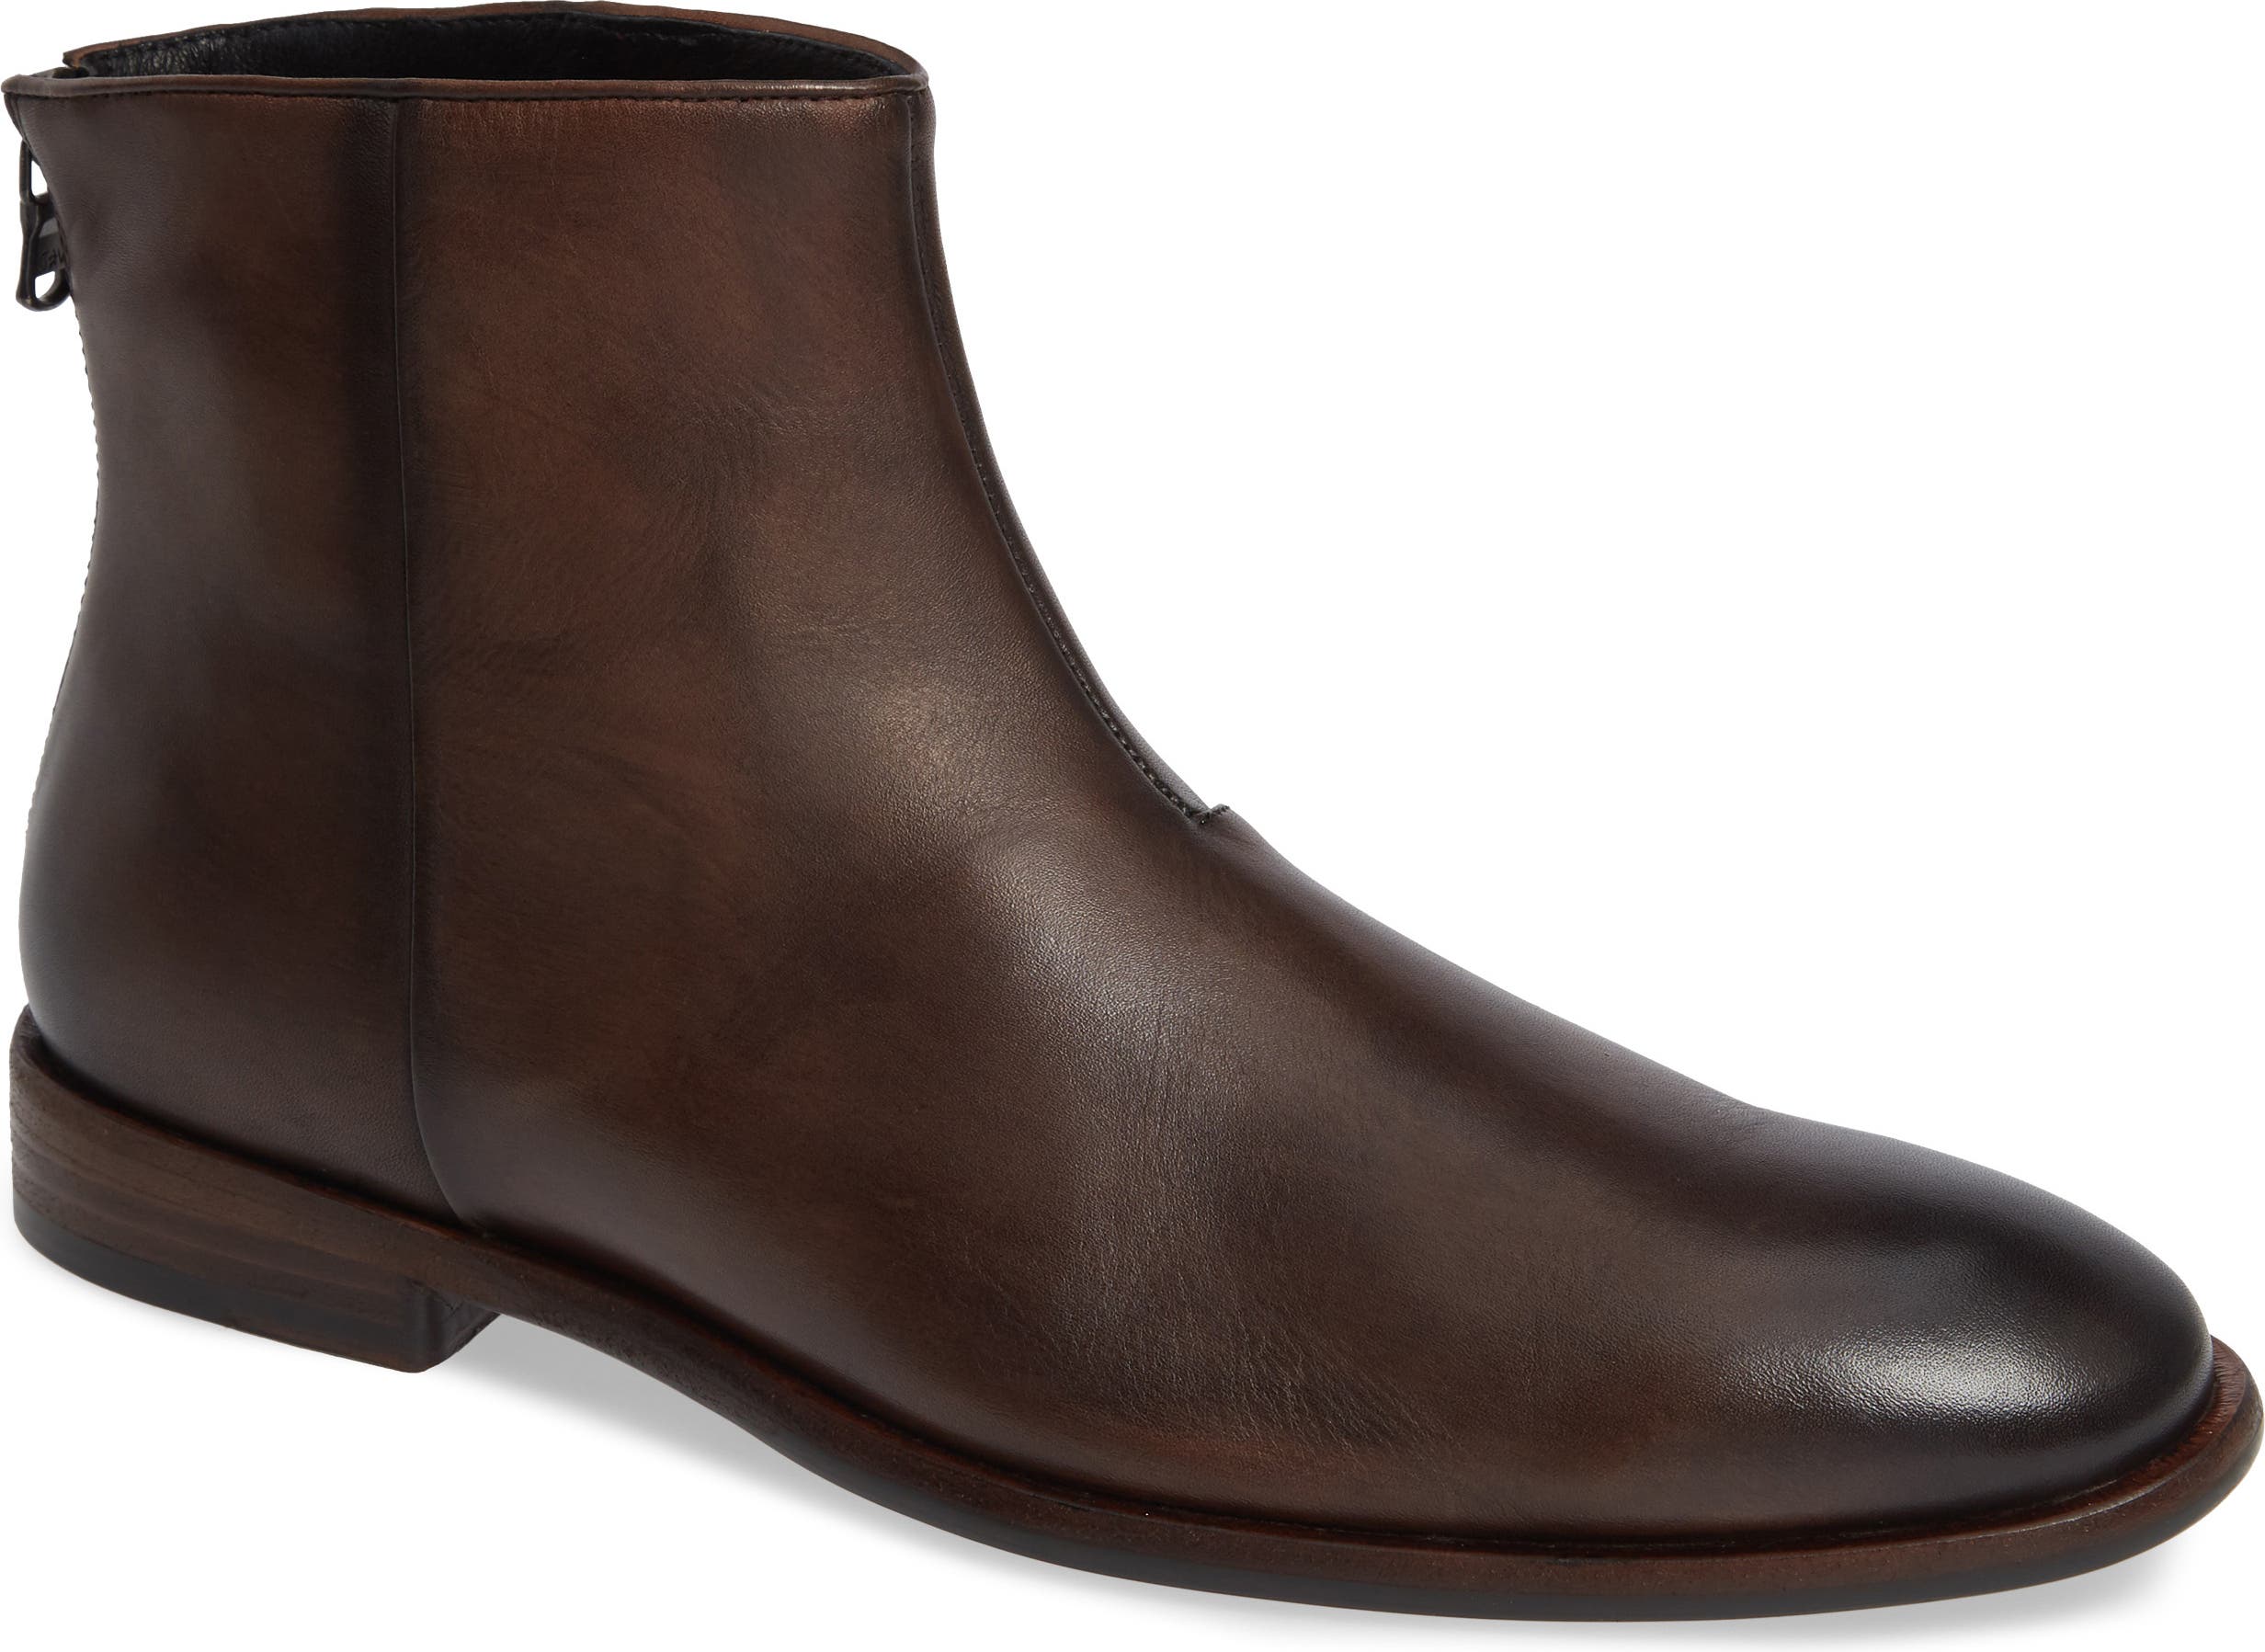 John Varvatos Mens NYC Back Zip Wood Brown Ankle BOOTS Size 10.5 for sale online 1621696